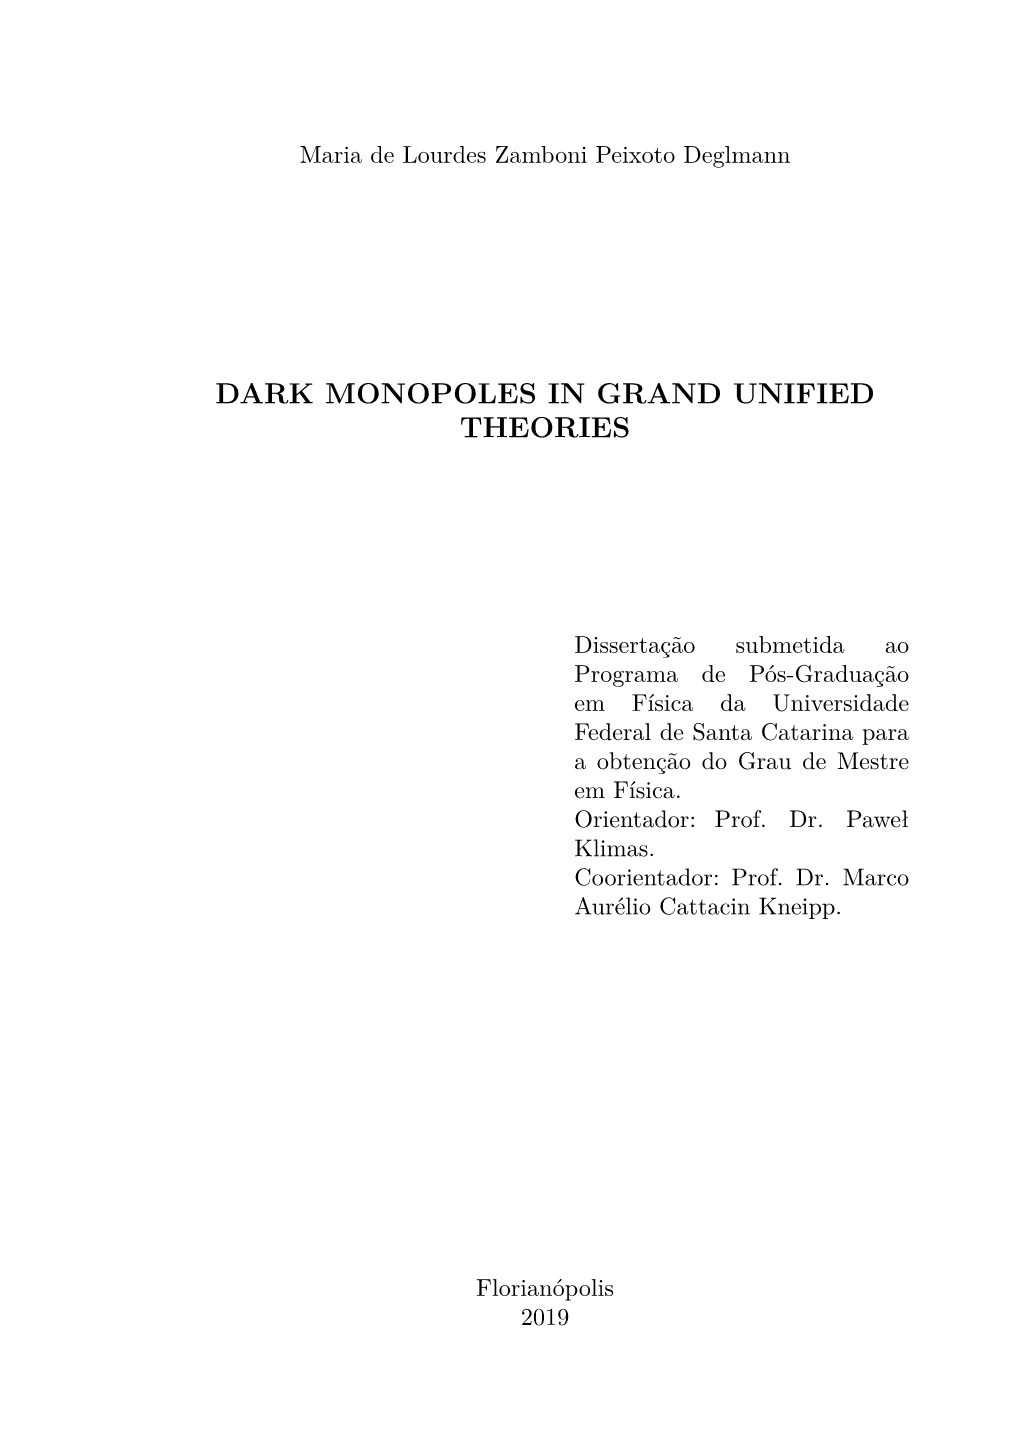 Dark Monopoles in Grand Unified Theories